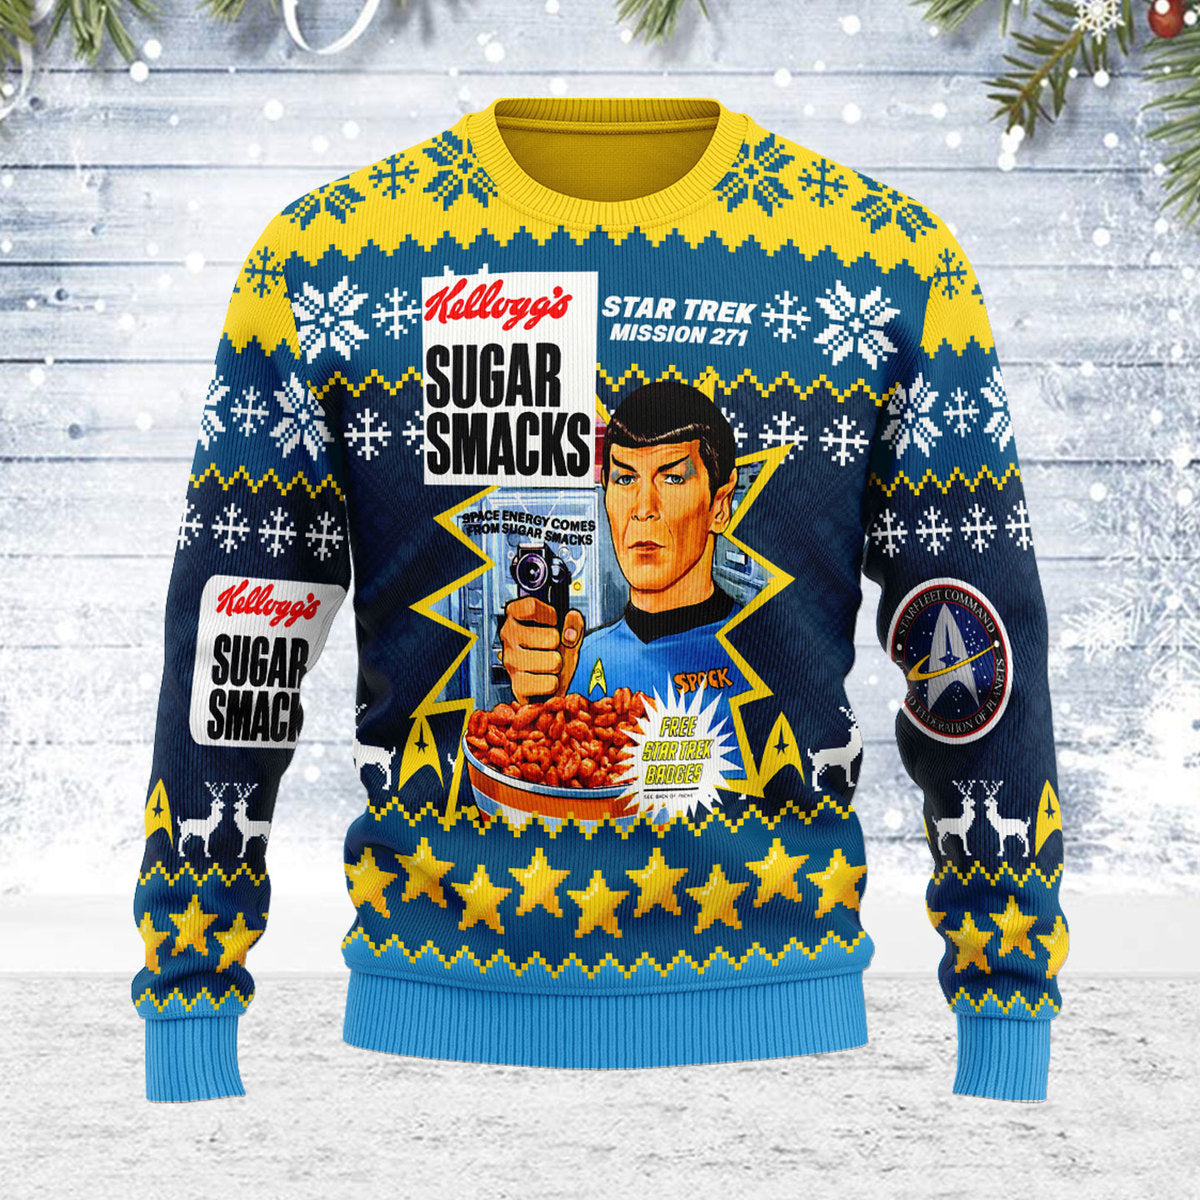 Star Trek Sugar Smacks ST Mission271 Christmas - Sweater - Ugly Christmas Sweater